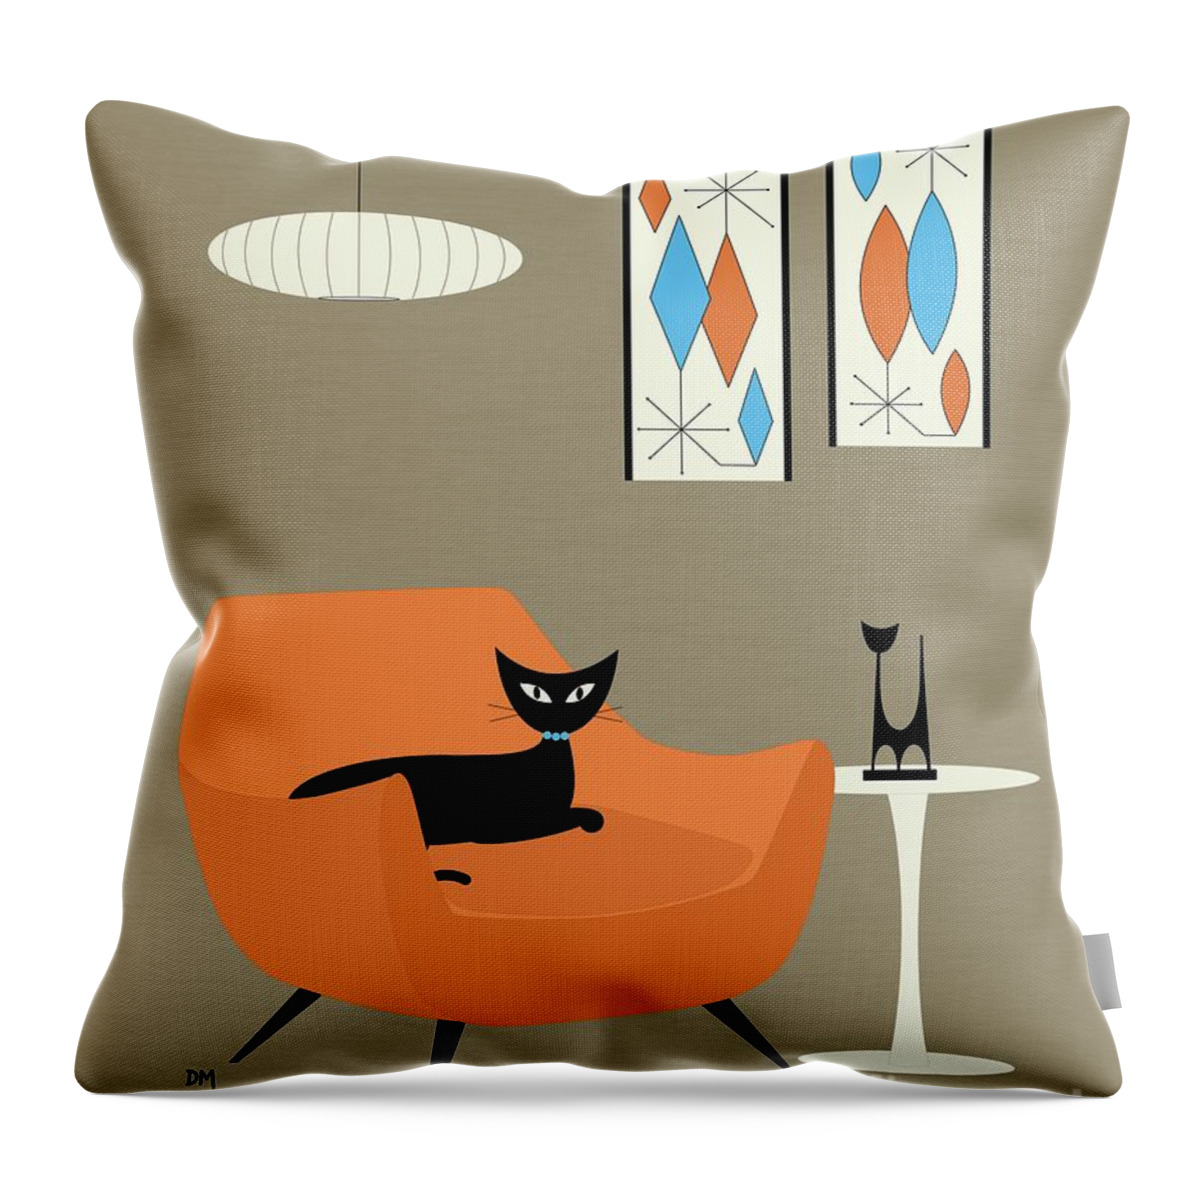  Throw Pillow featuring the digital art Mini Gravel Art Orange Chair by Donna Mibus